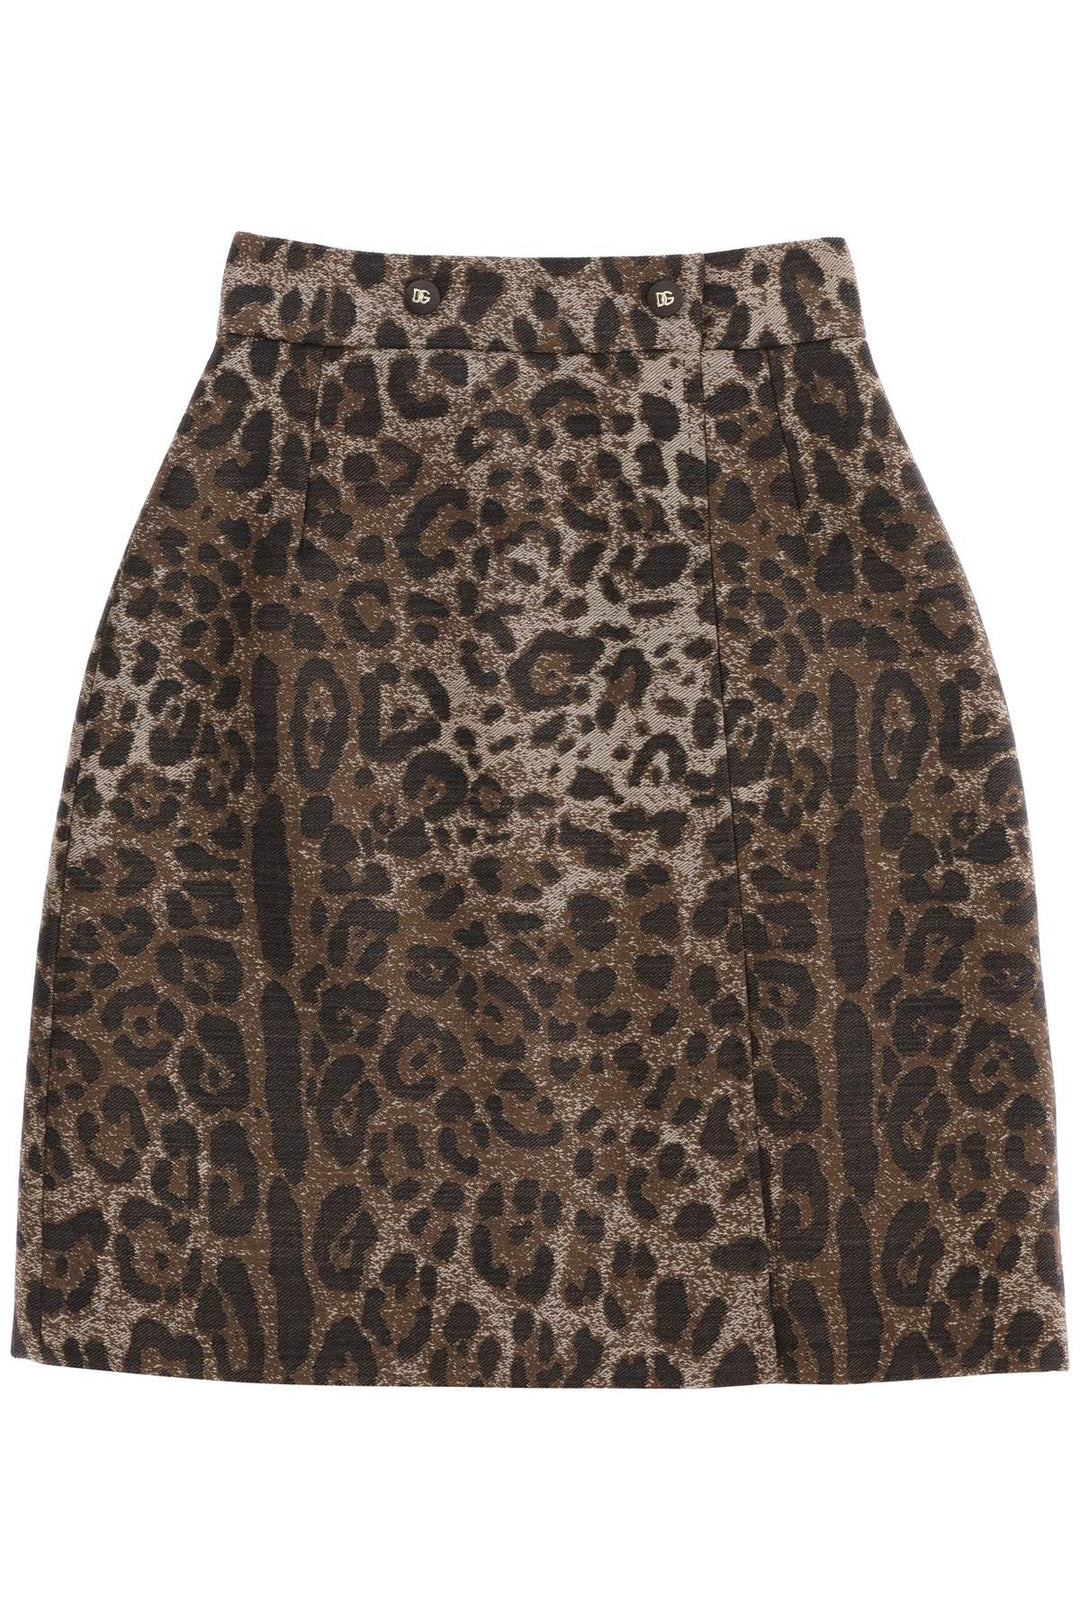 Dolce & Gabbana Wool Jacquard Skirt With Leopard Motif   Beige